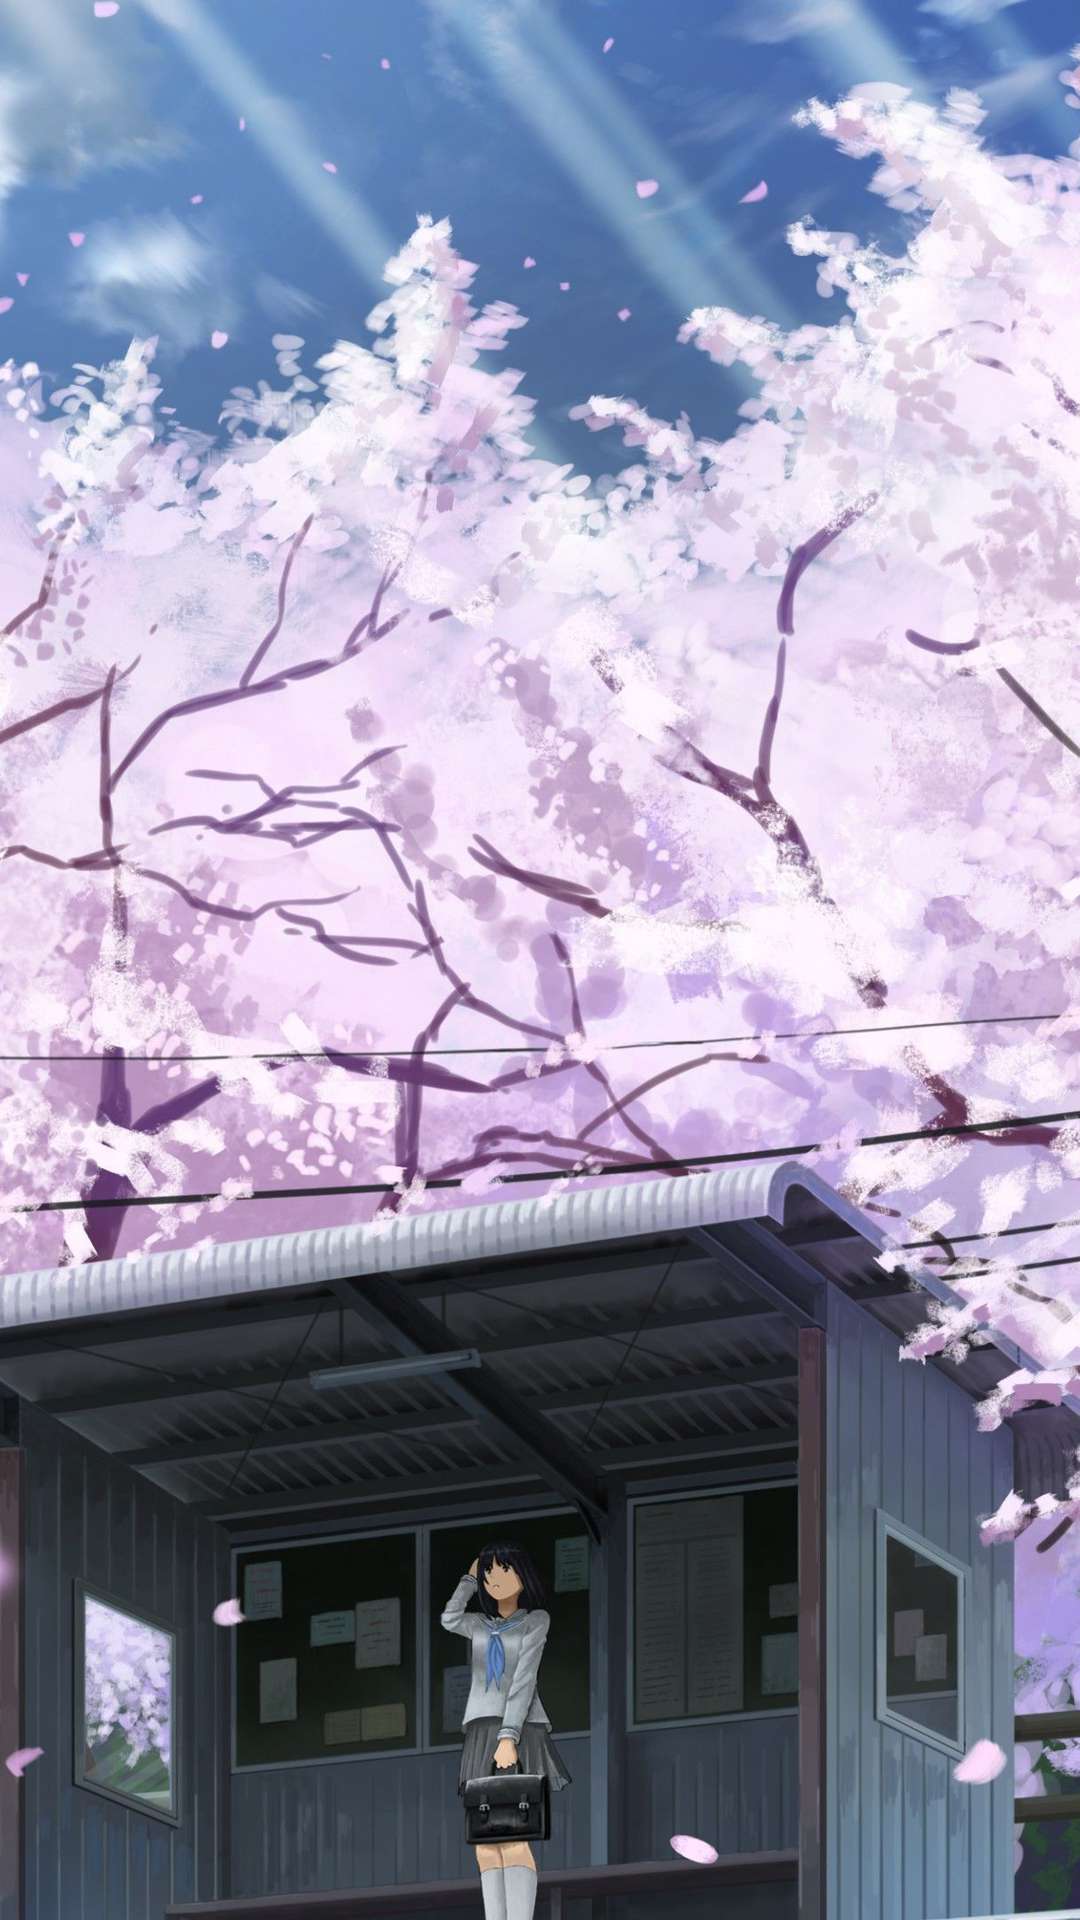 Koe No Katachi Flowers Anime Clouds Wallpaper  Resolution3840x2160   ID1272237  wallhacom